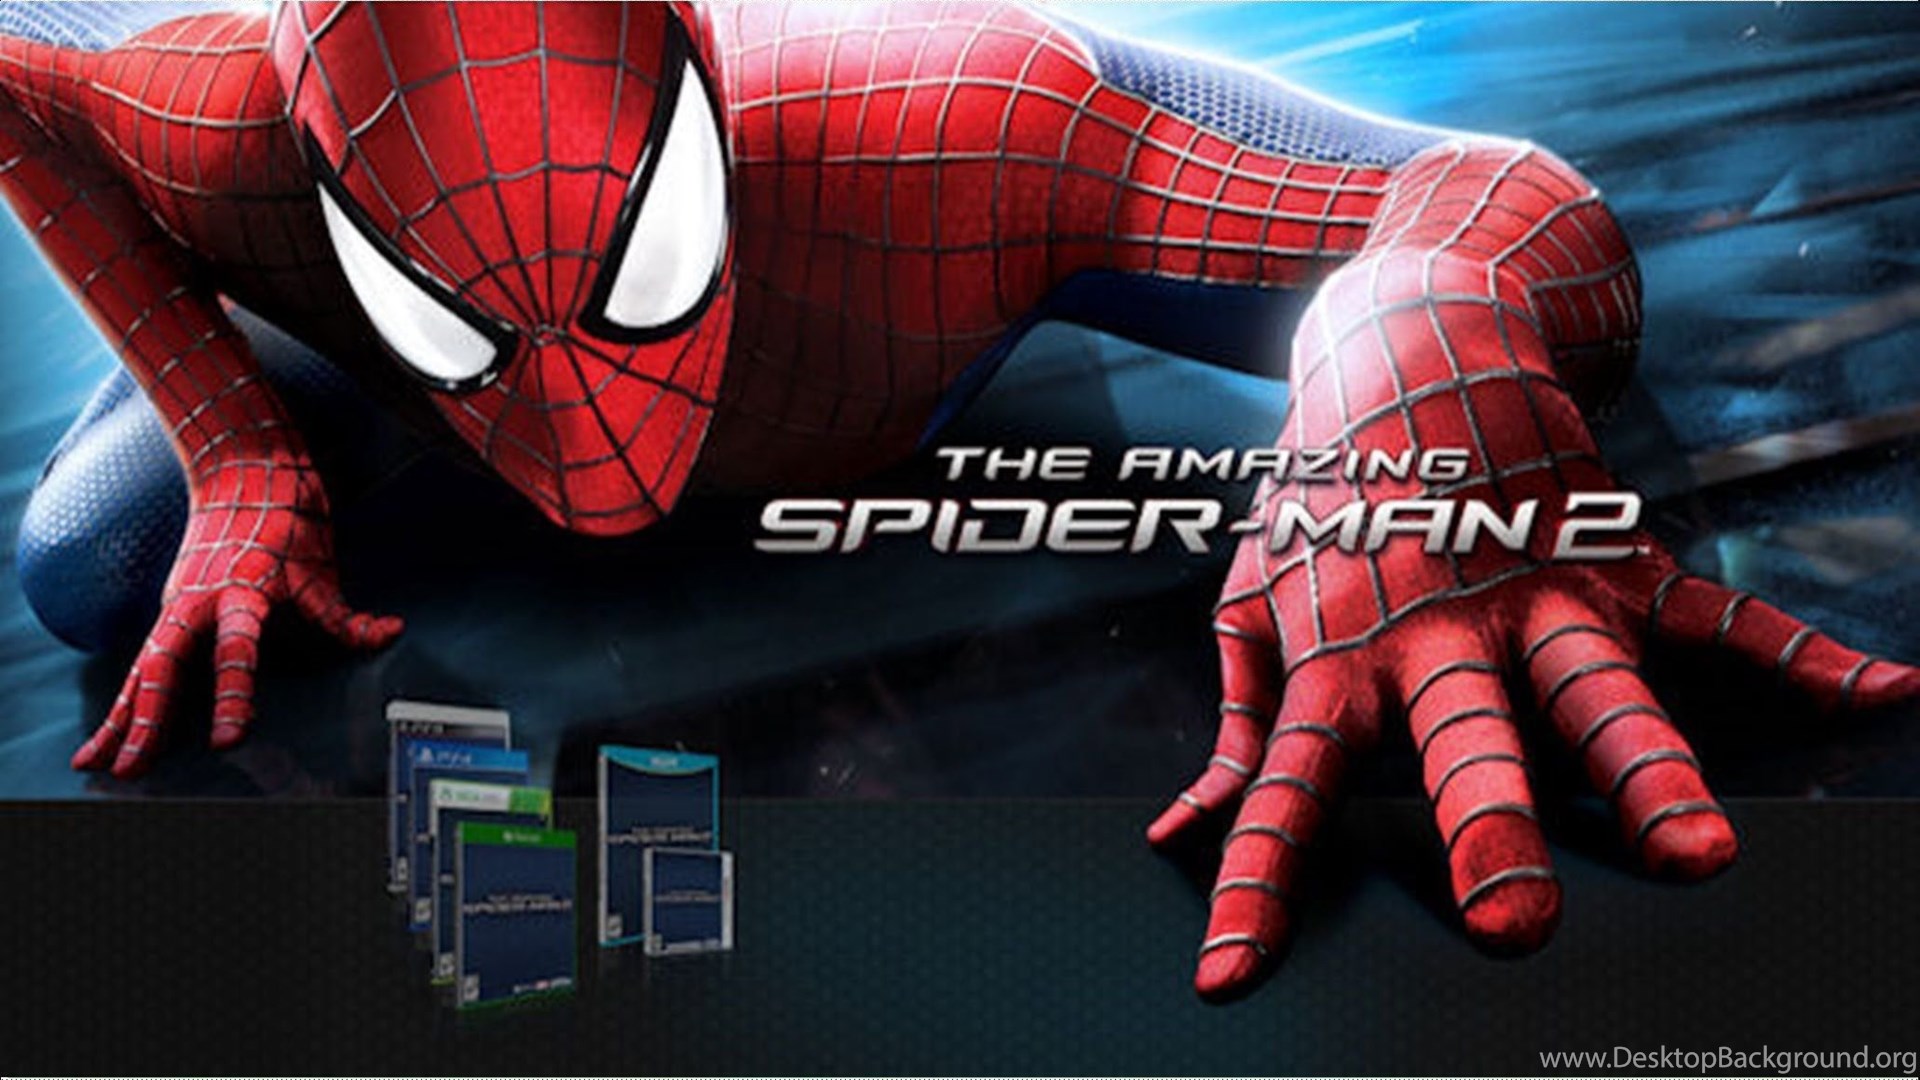 The amazing spider man 2 wallpaper HD My Free Wallpaper Hub Desktop Background